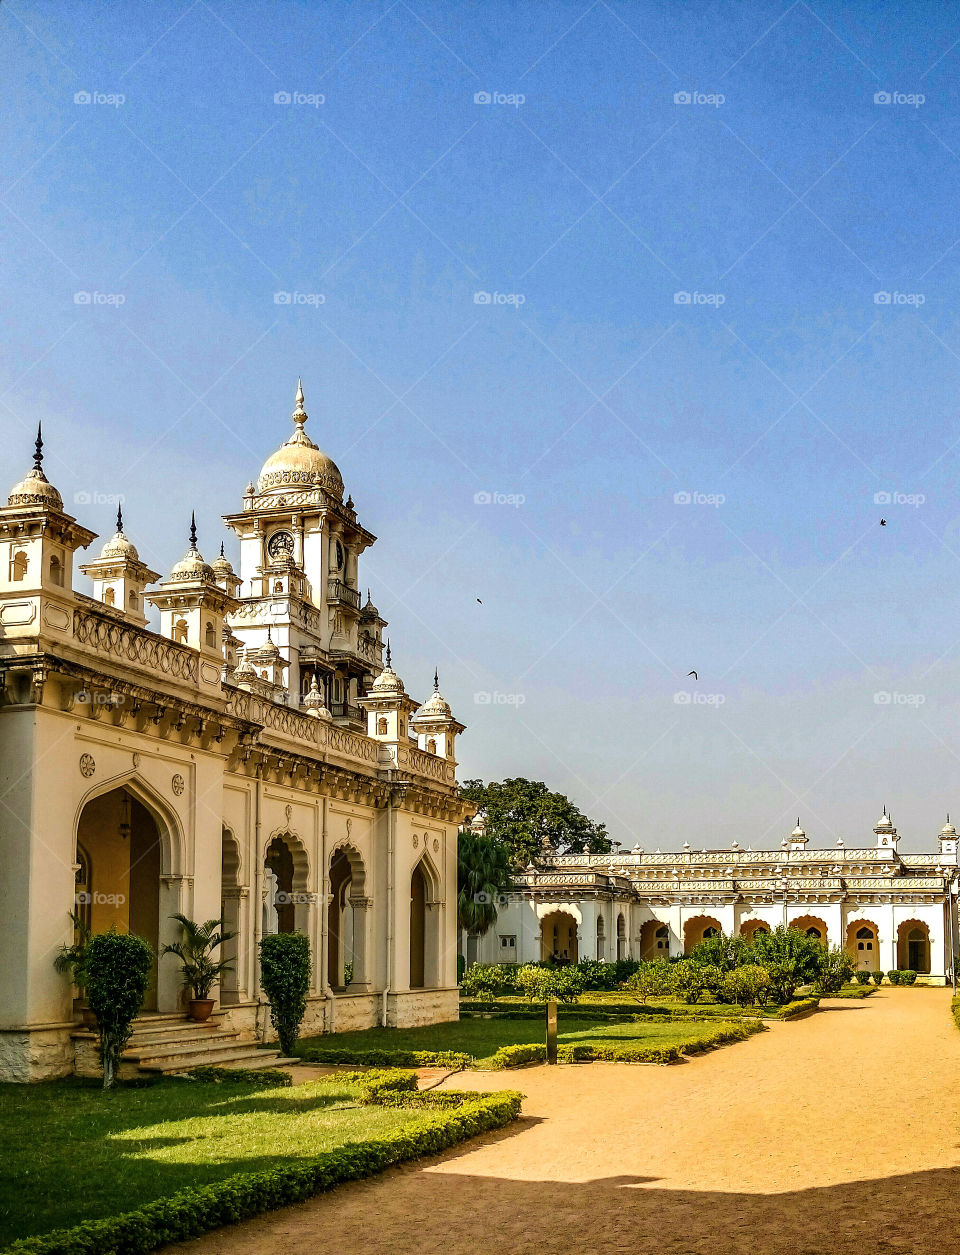 beautyfull chawmohalla palace in hyderabad andhra pradesh indian